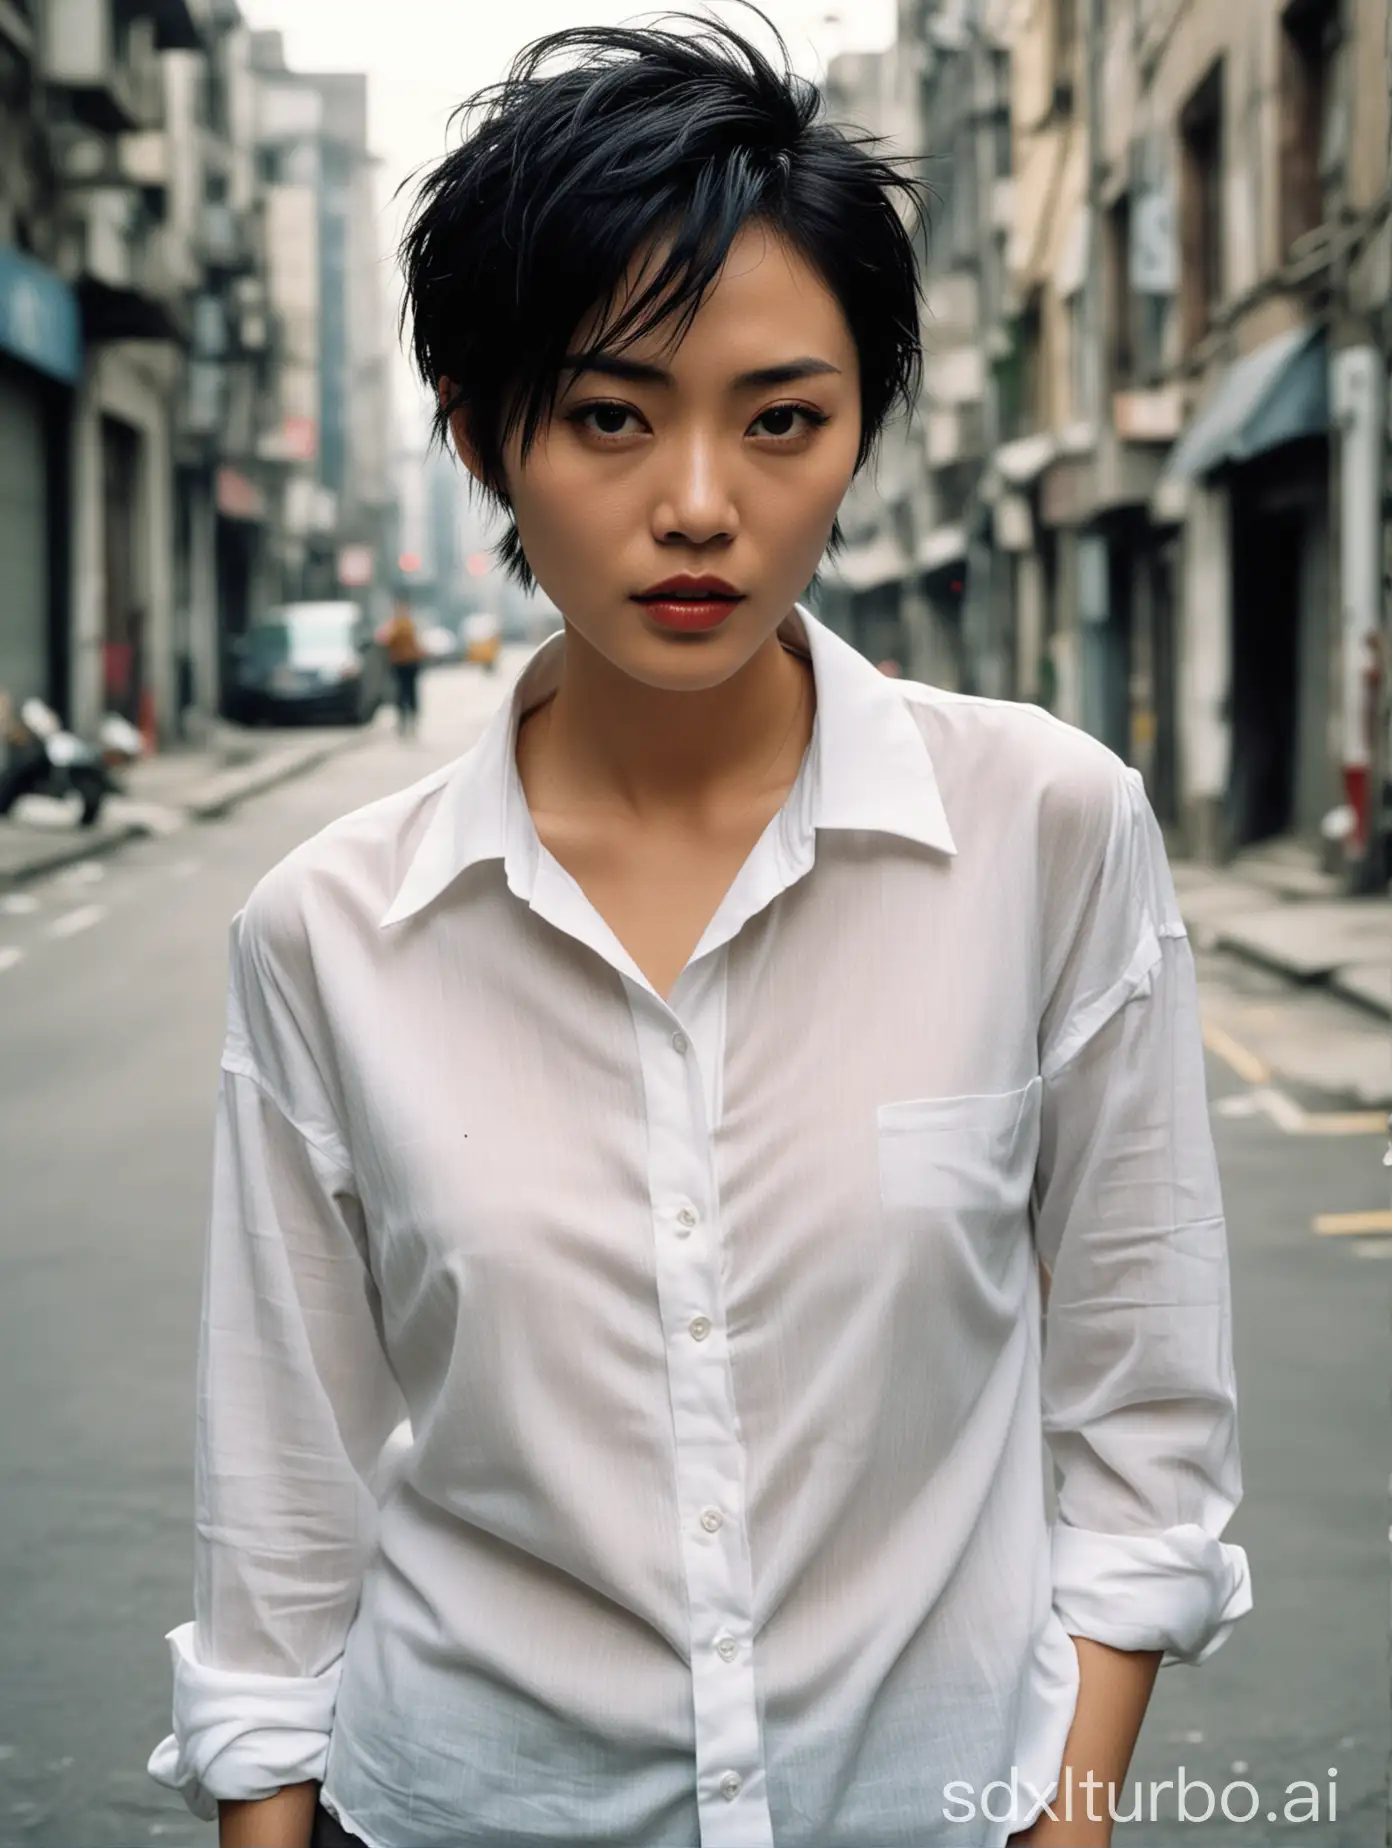 Faye Wong, 王菲, messy short hair, dark lipstick, white shirt, angled glamor pose, abandoned urban street, age 25, 1995